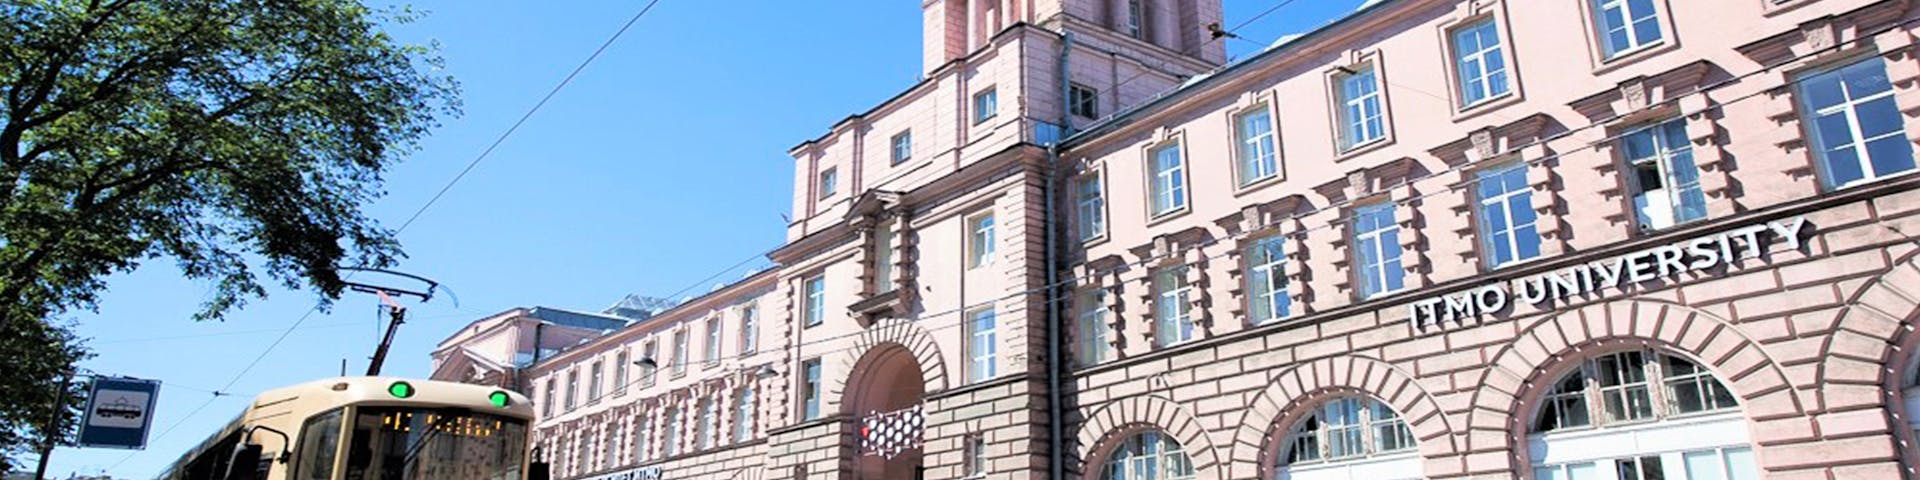 ITMO University - Saint Petersburg - Russia - DistanceLearningPortal.com
